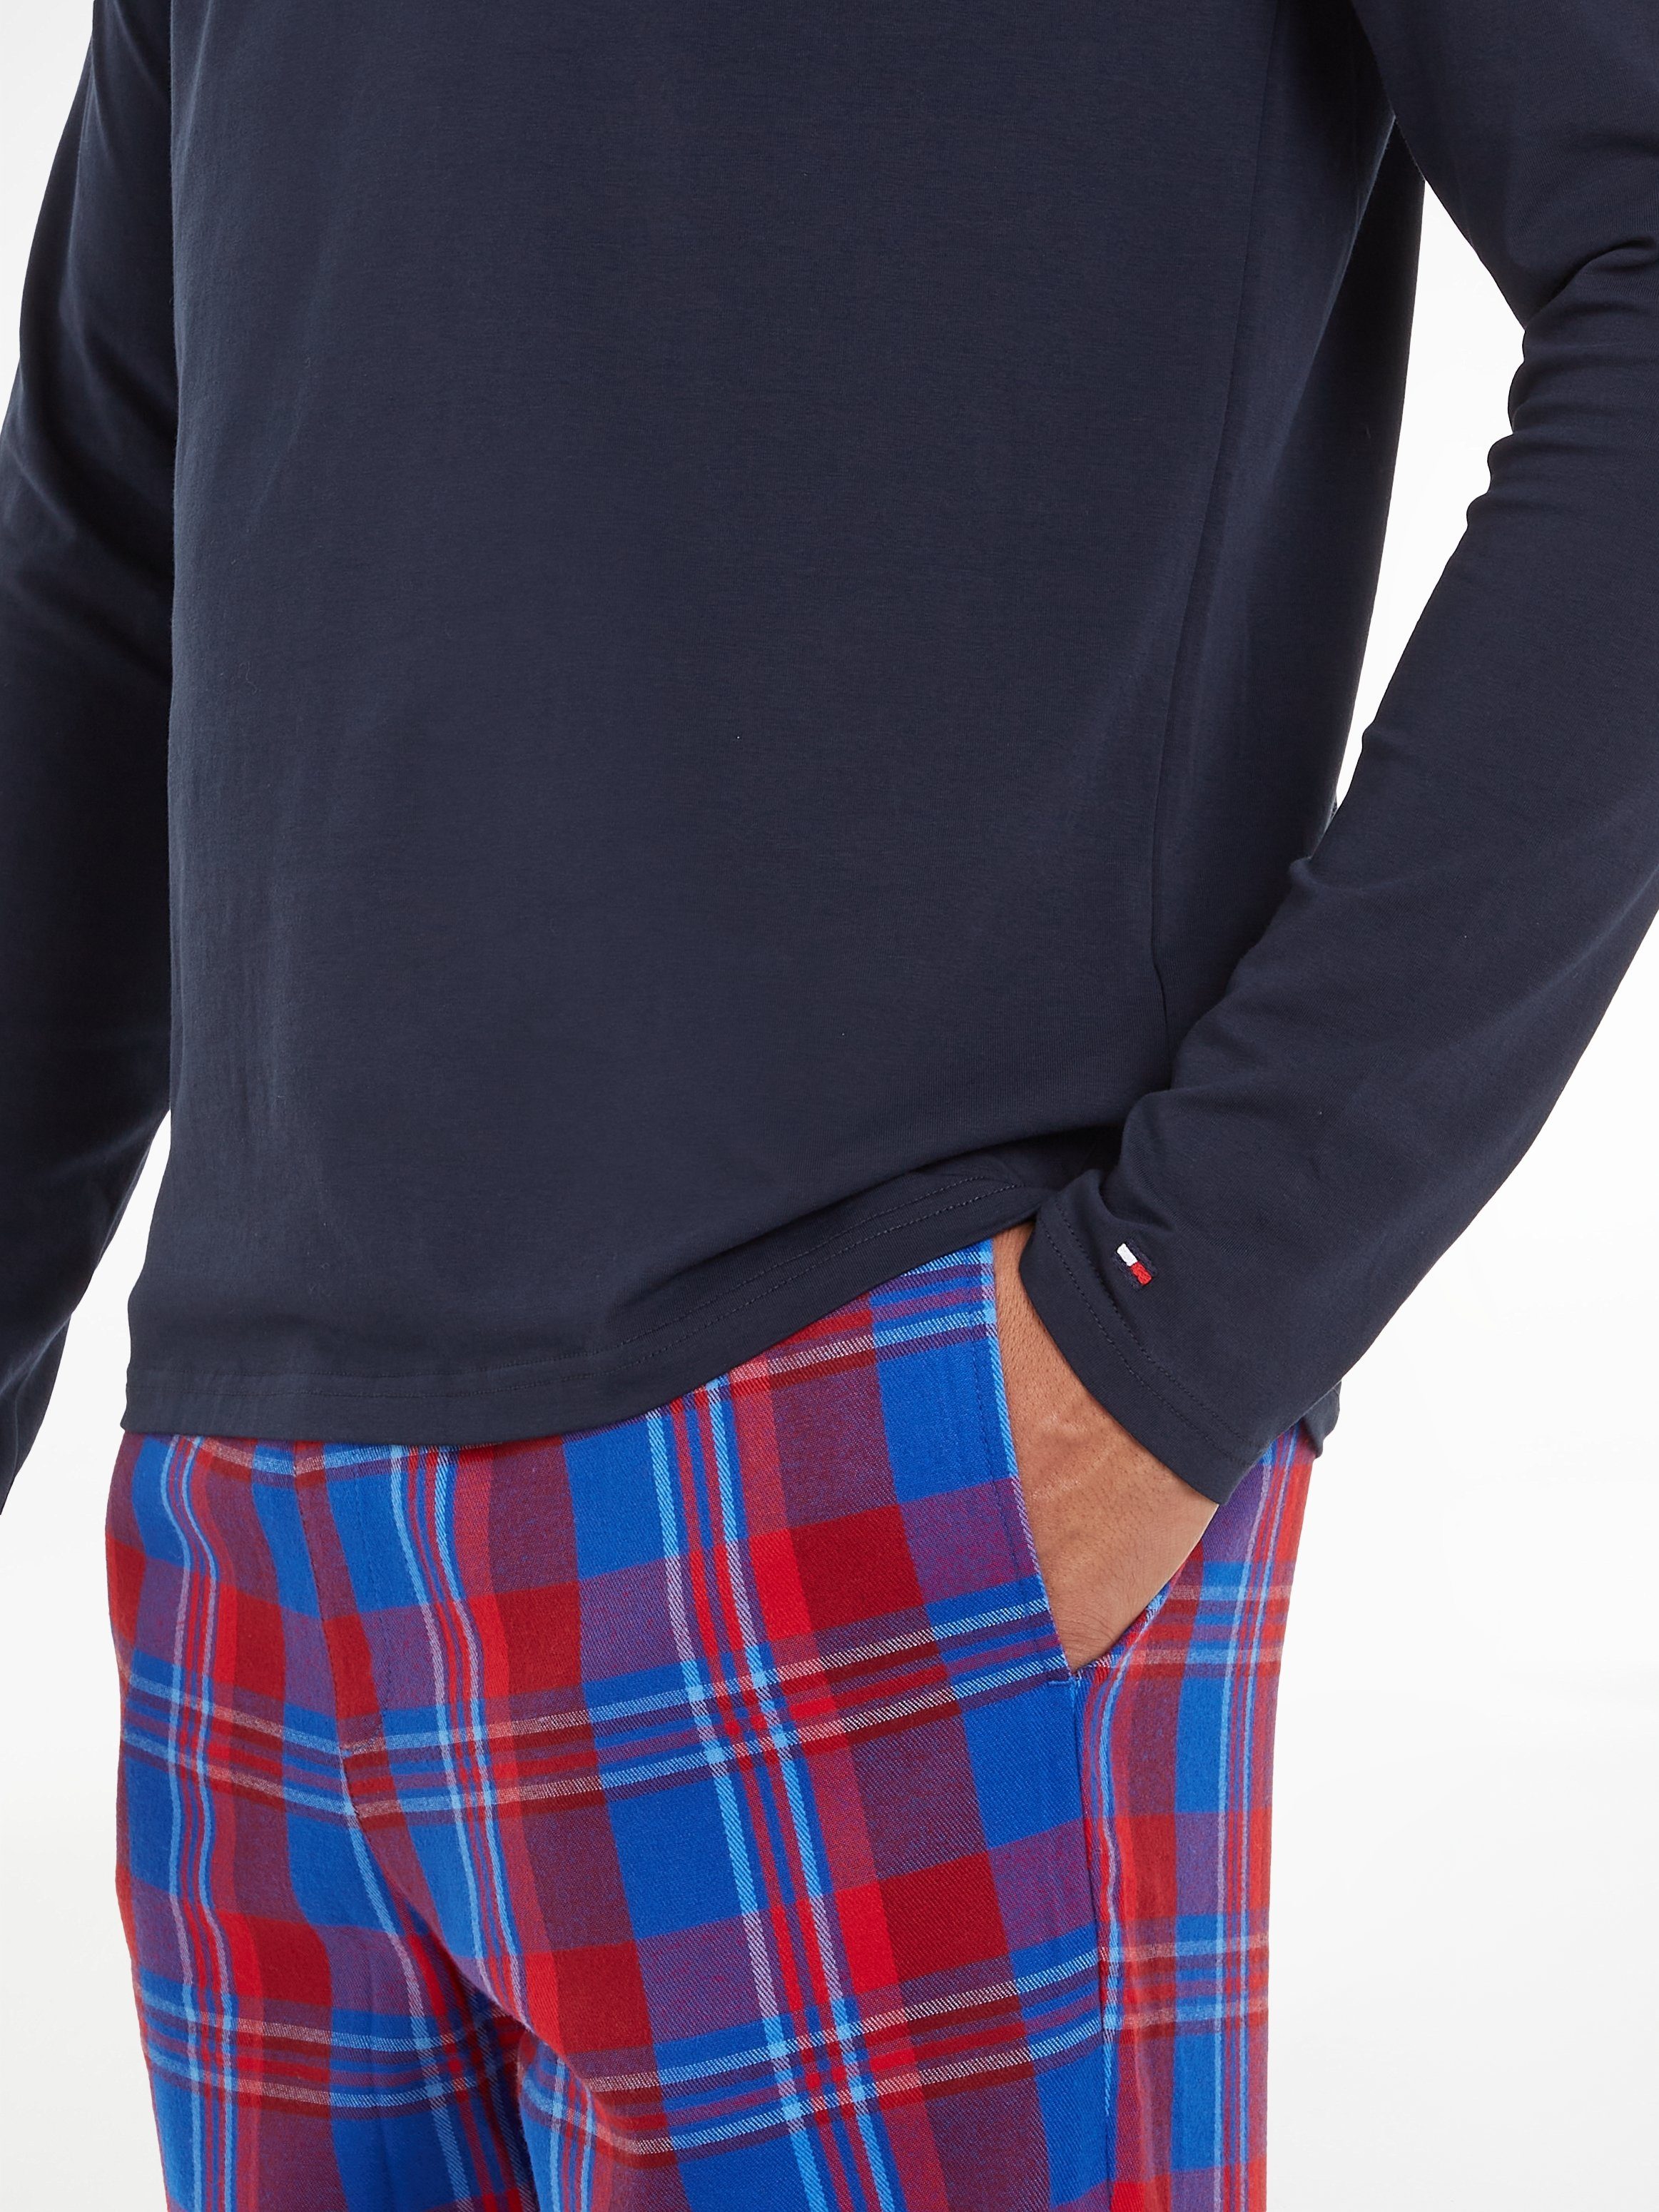 Tommy Hilfiger Underwear Pyjama LS PANT SLIPPERS SET FLANNEL in een geruit design (set 3-delig)